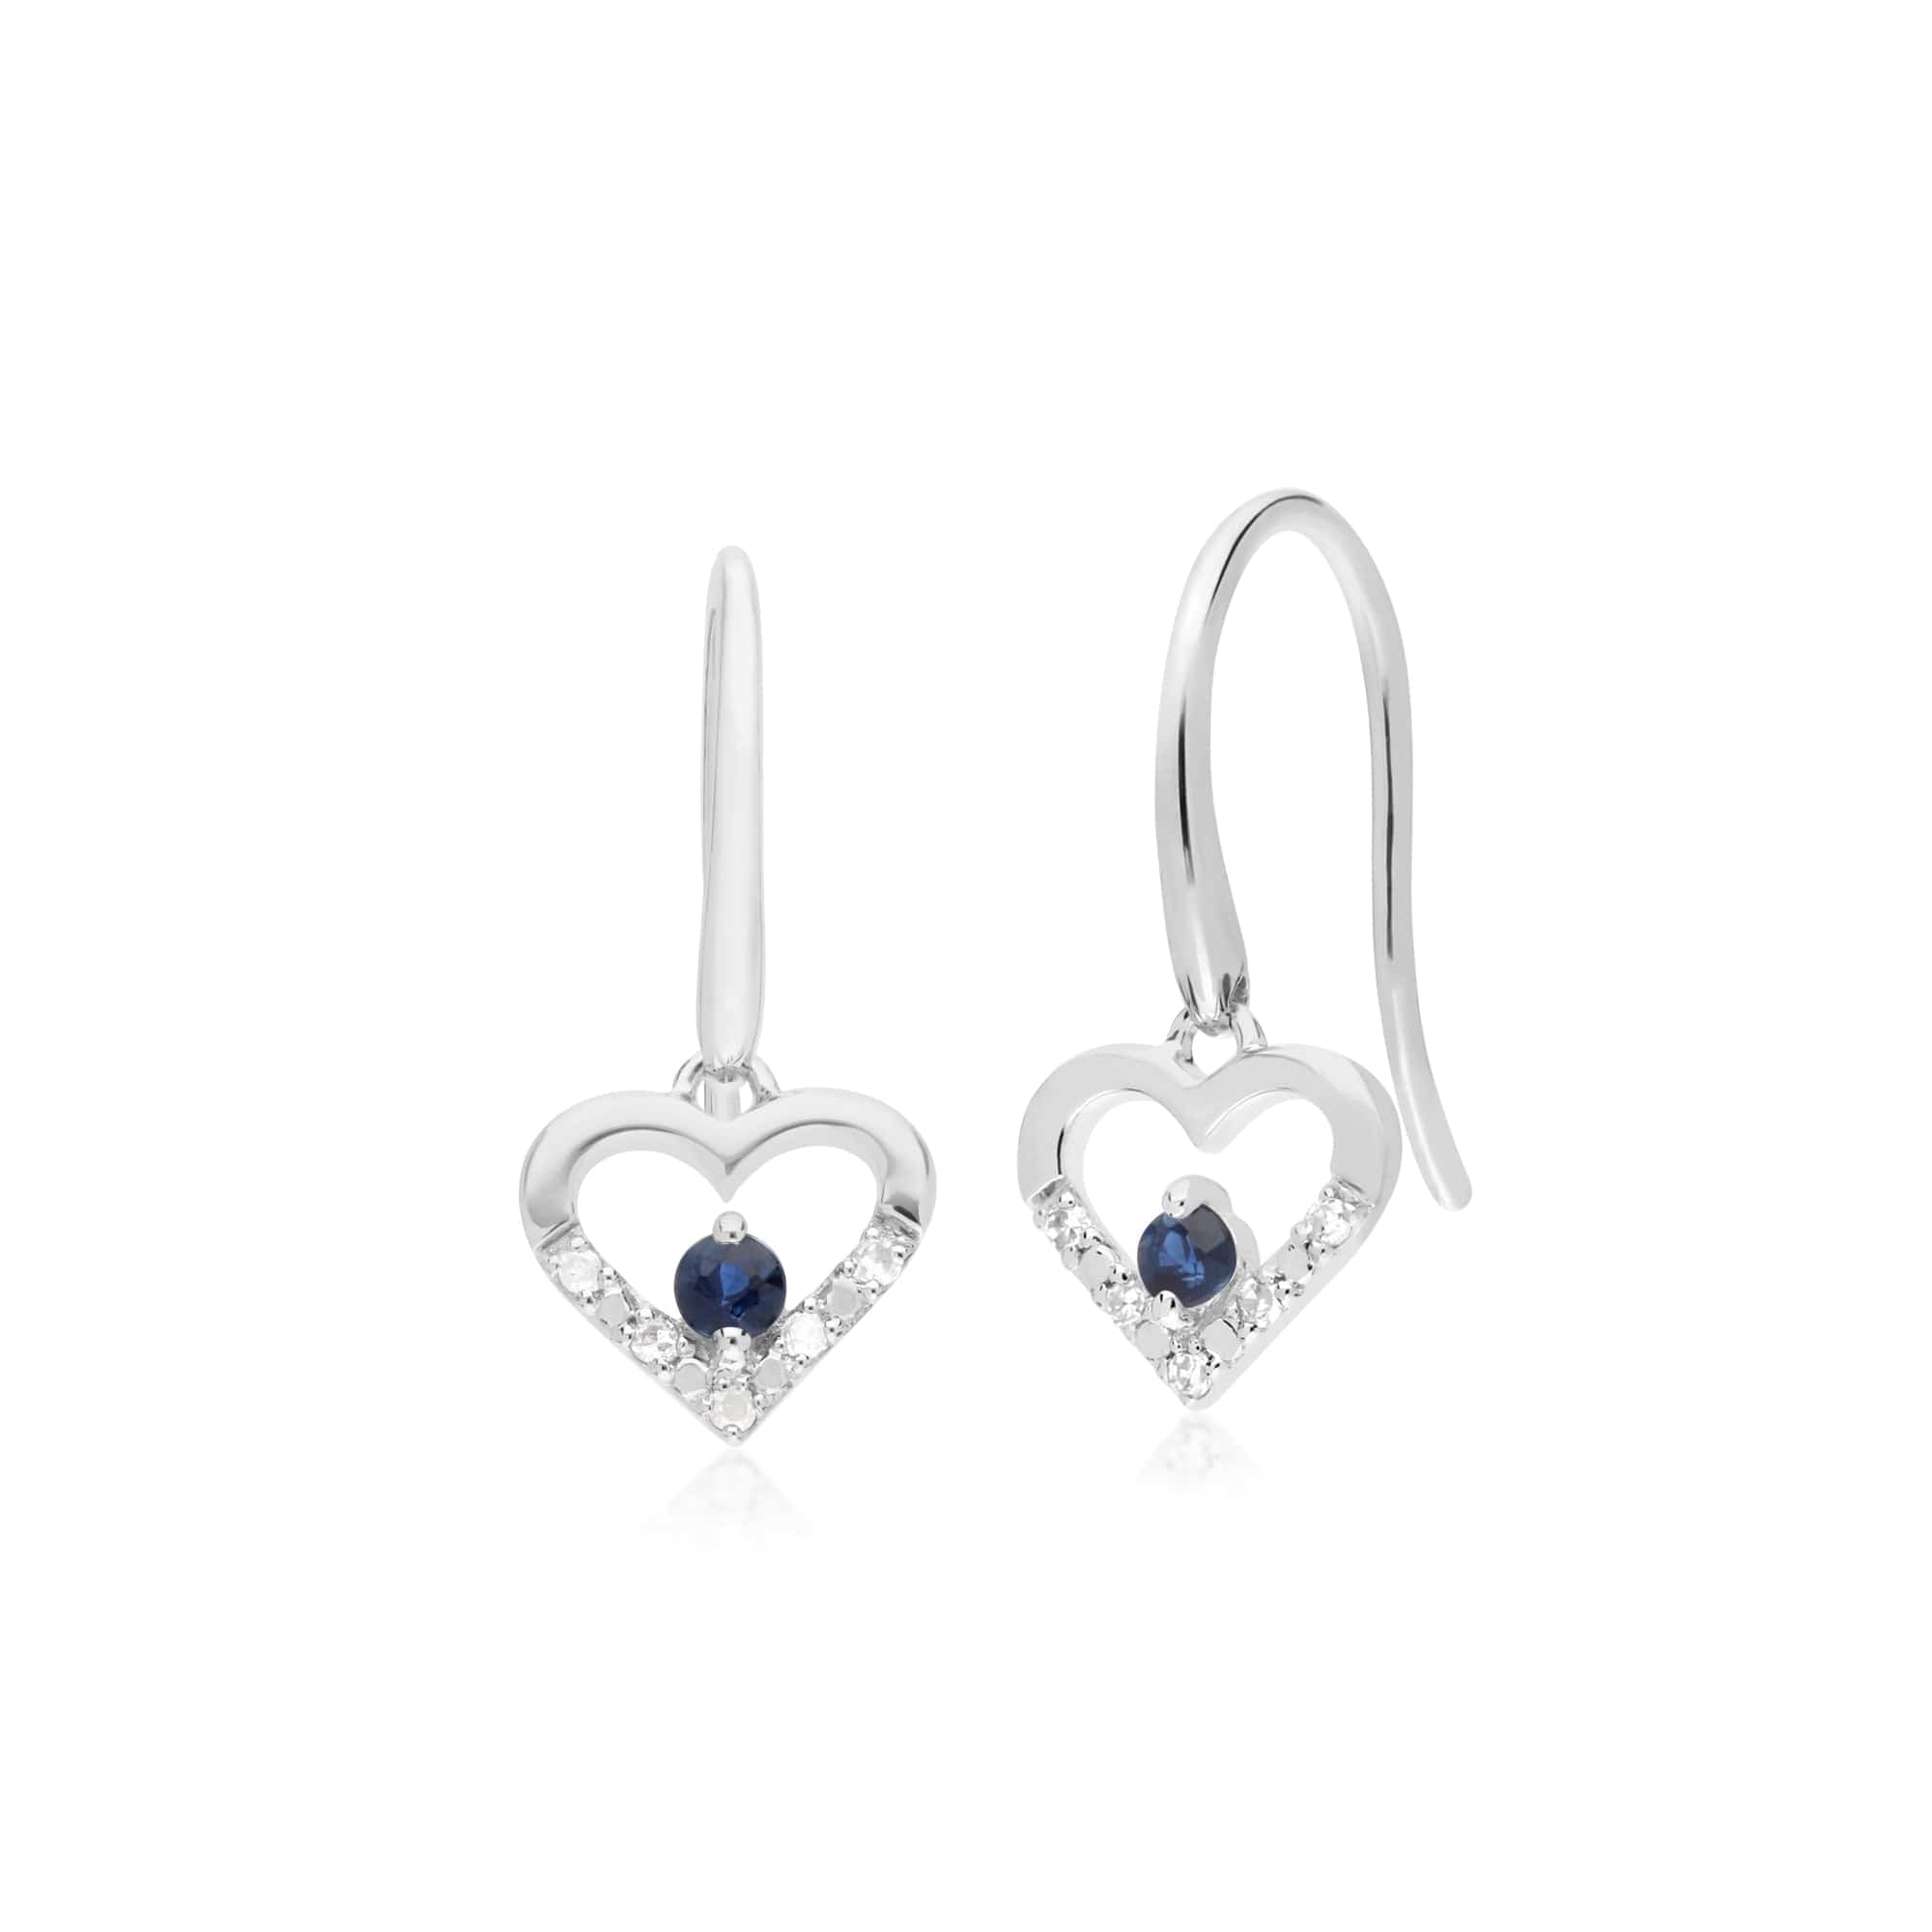 162E0258029-162P0219029 Classic Sapphire & Diamond Heart Drop Earrings & Pendant Set in 9ct White Gold 2